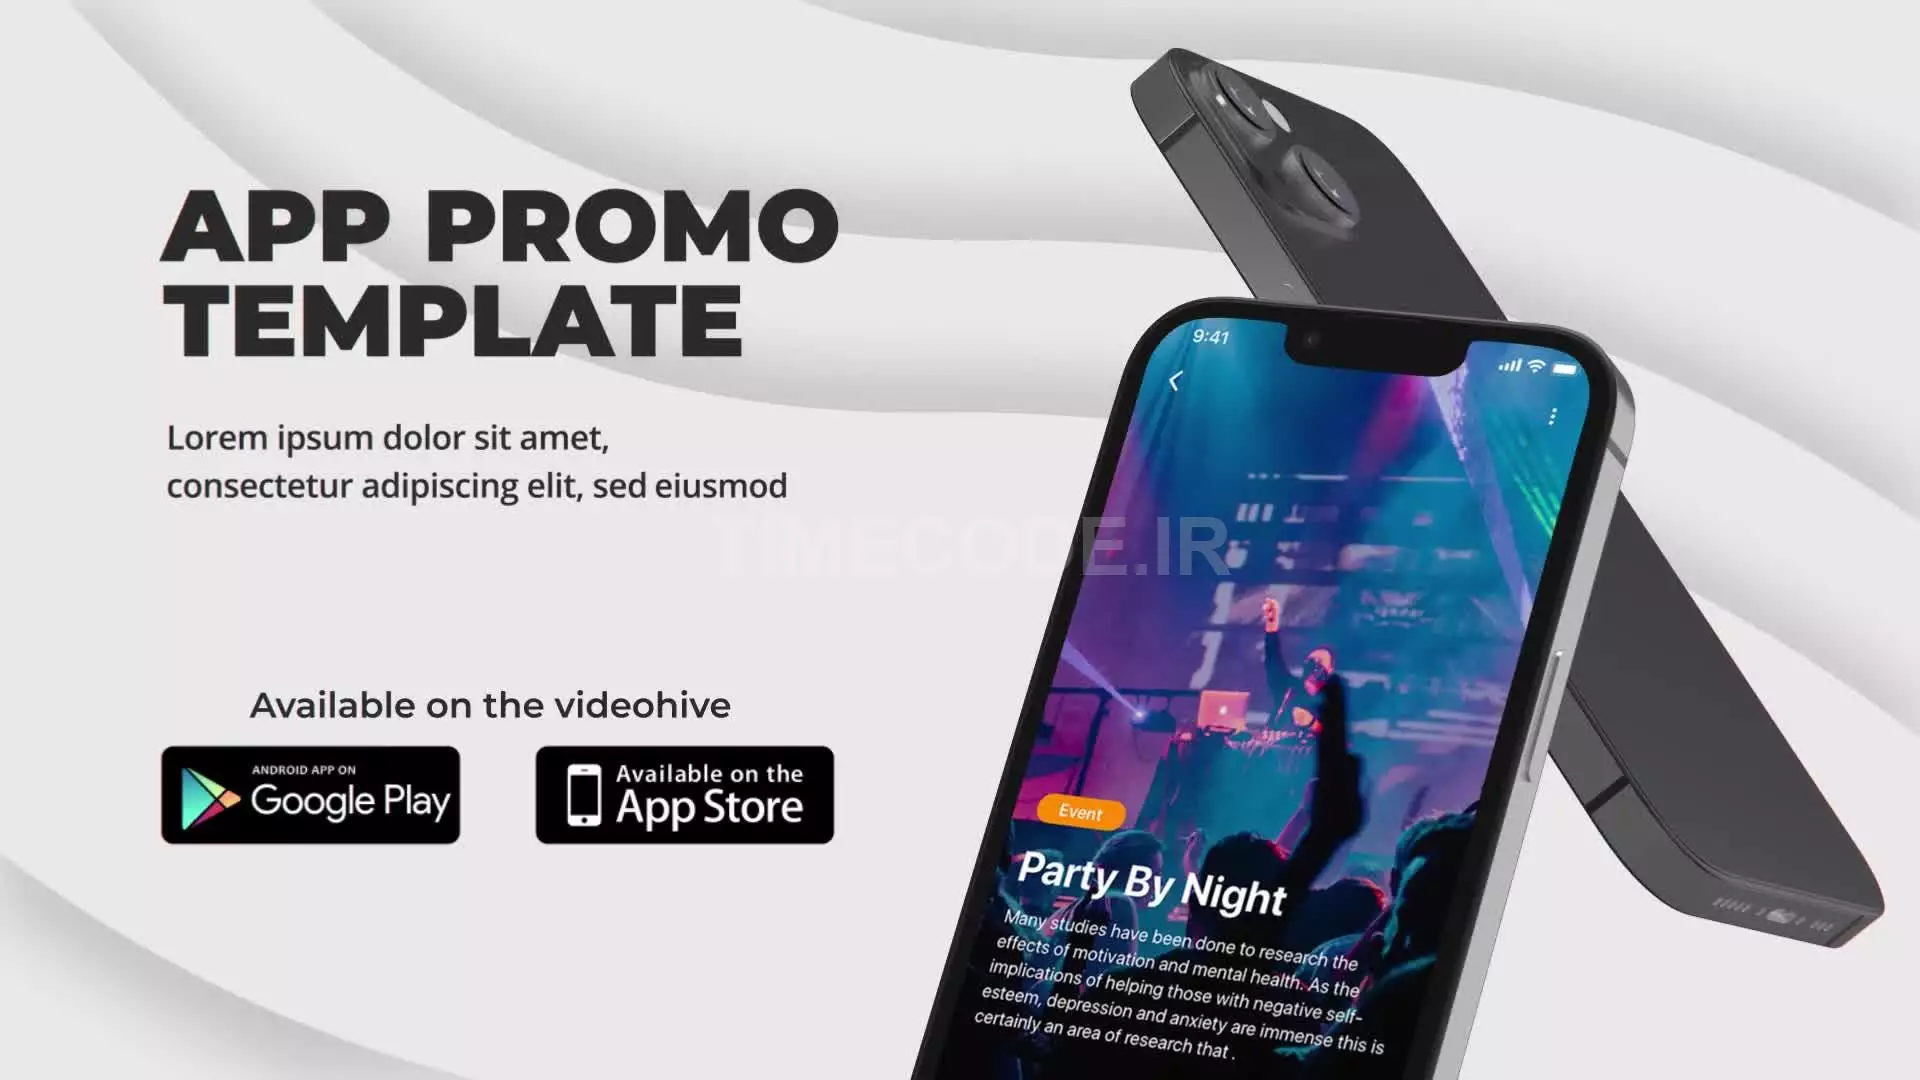 Clean App Promo | Phone 13